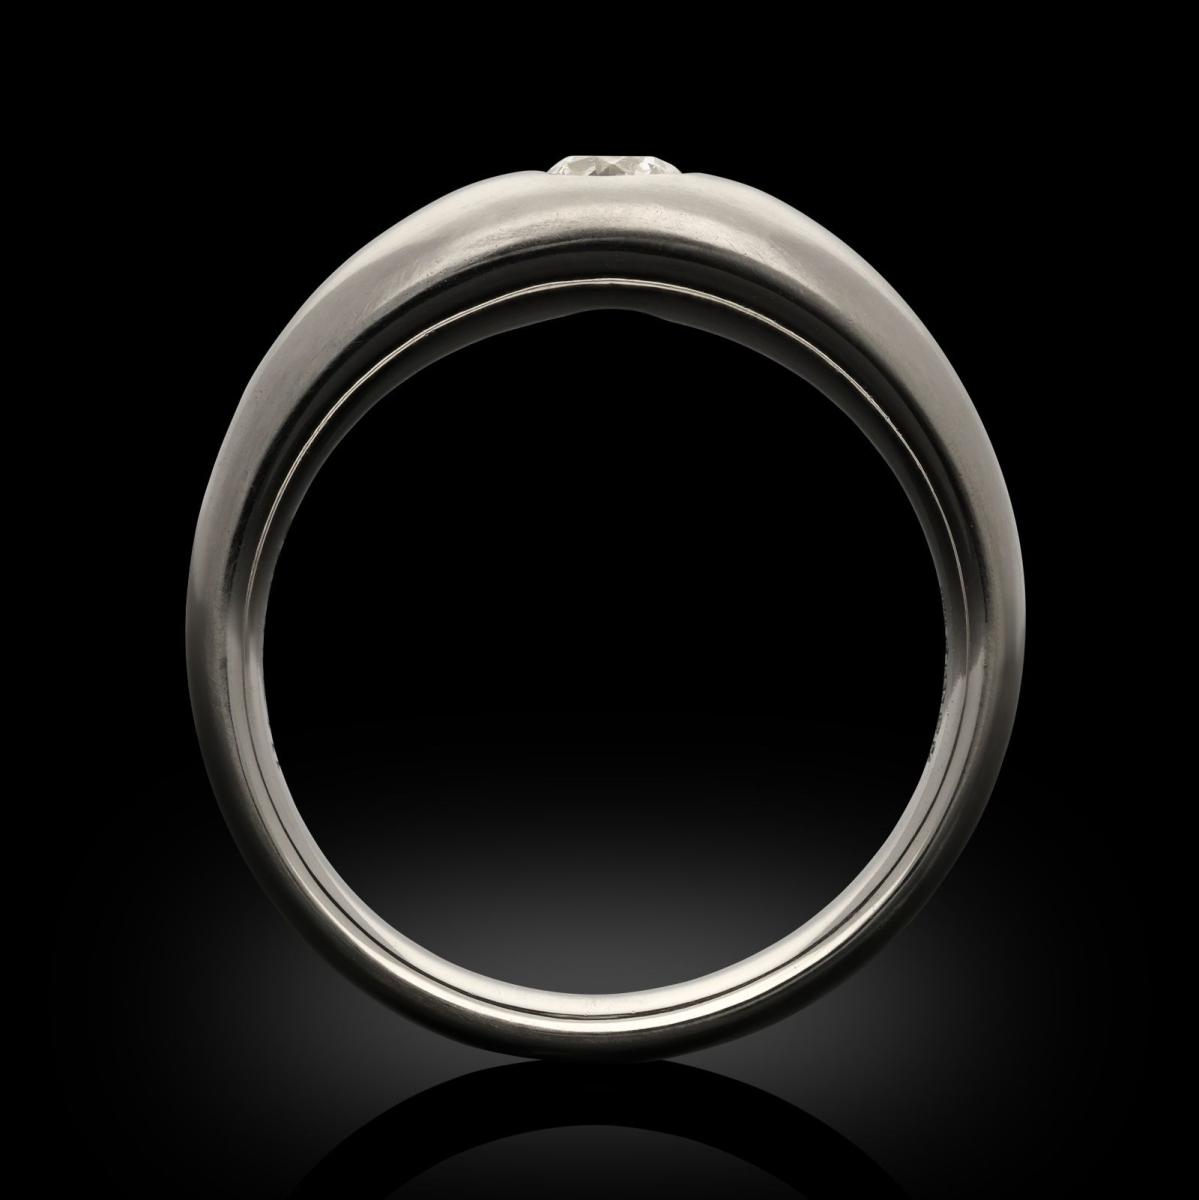 Hancocks Contemporary 0.45ct Old European Cut Diamond Band Ring in Platinum